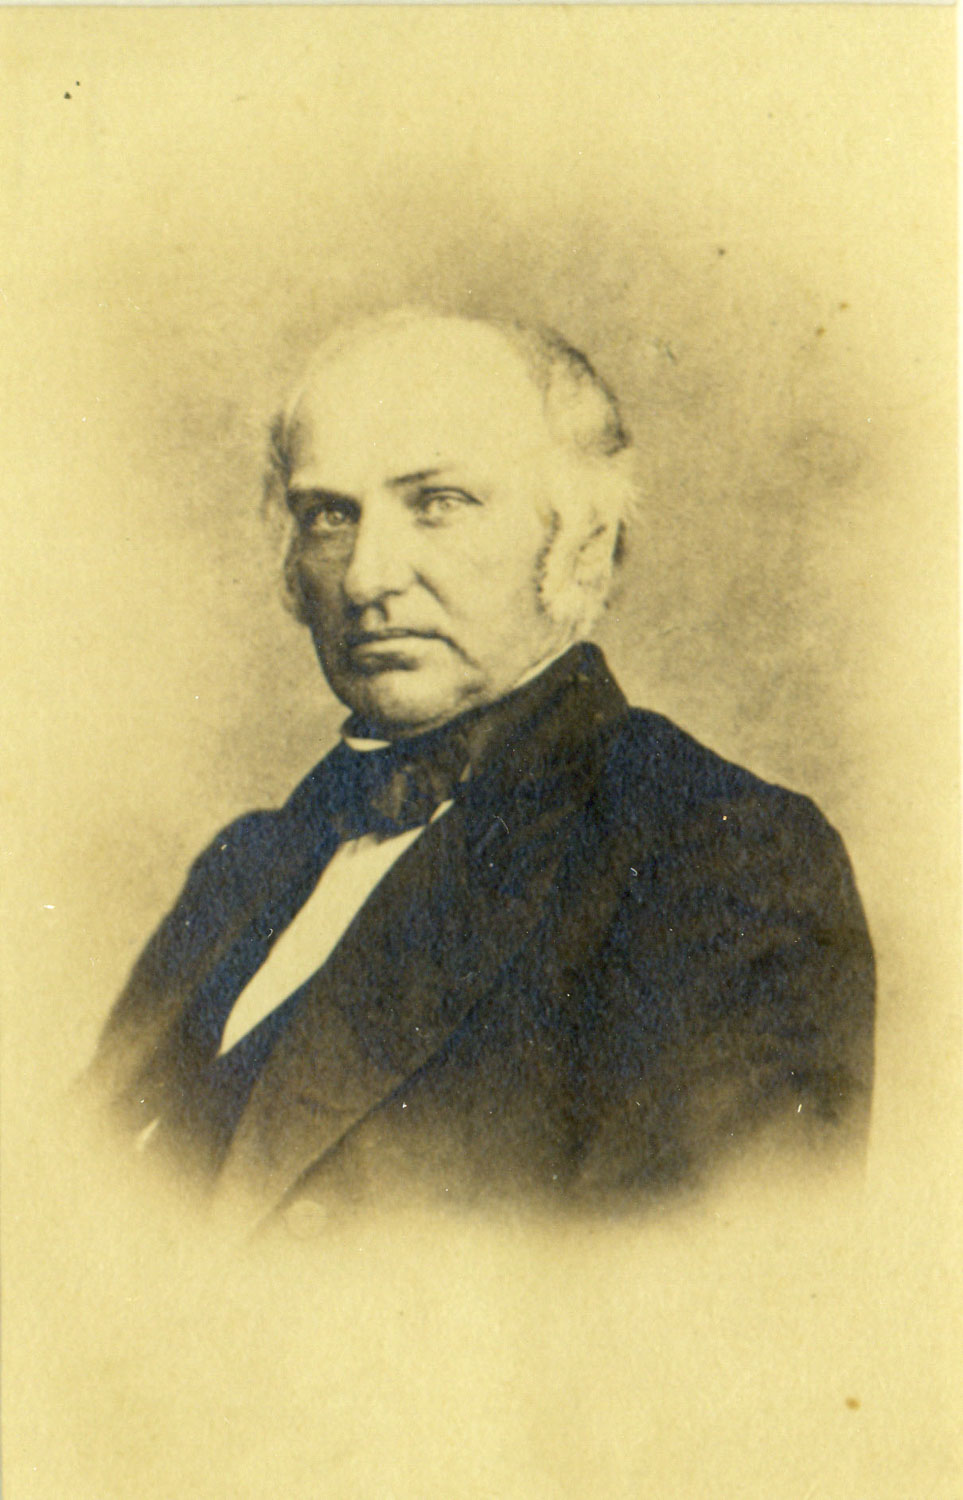 Edward Dickinson Baker